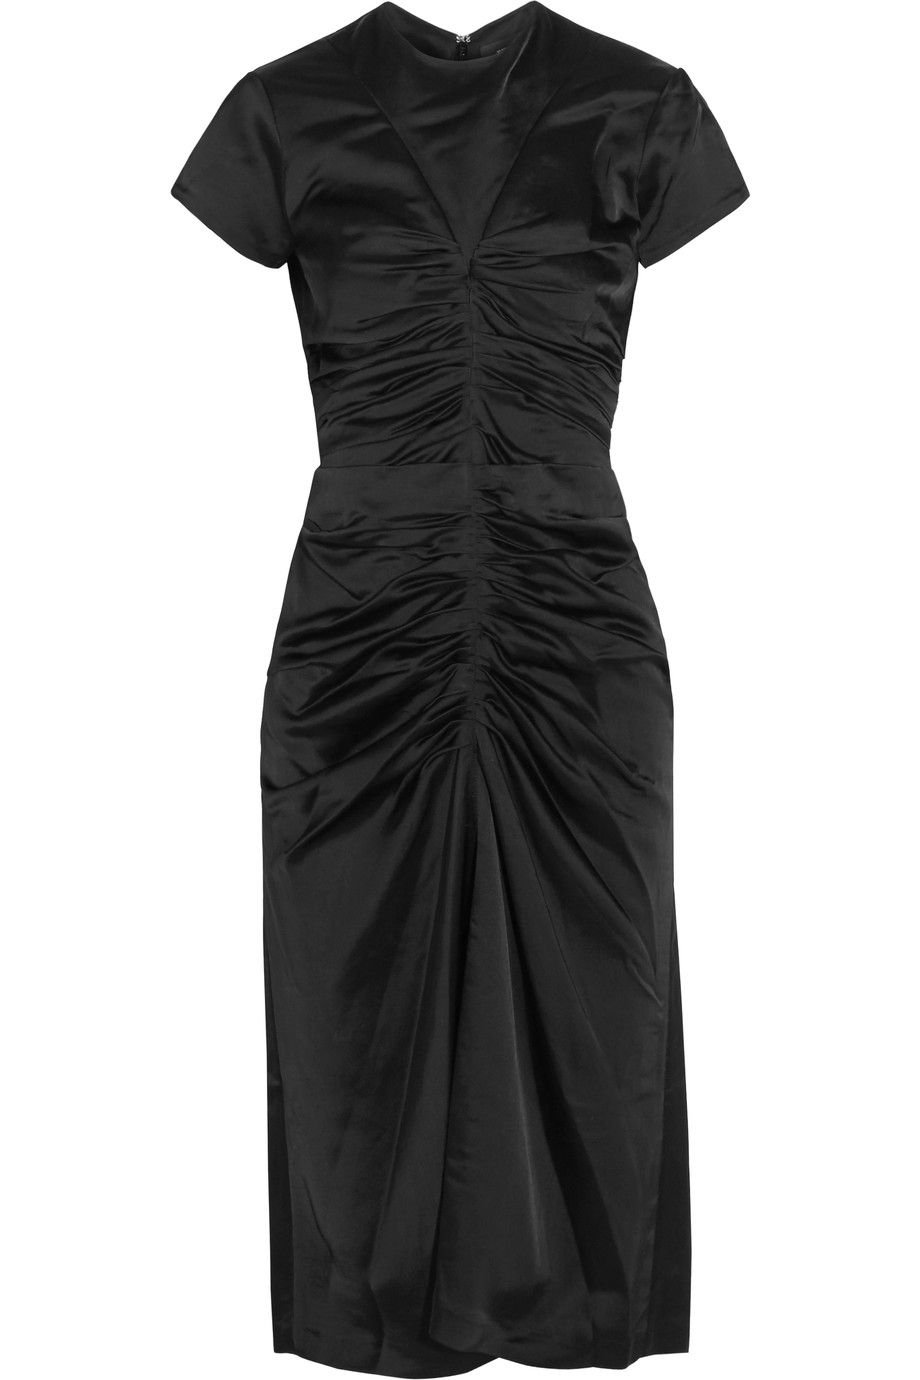 Clothing, Dress, Cocktail dress, Black, Day dress, Sleeve, Little black dress, Satin, Sheath dress, Formal wear, 